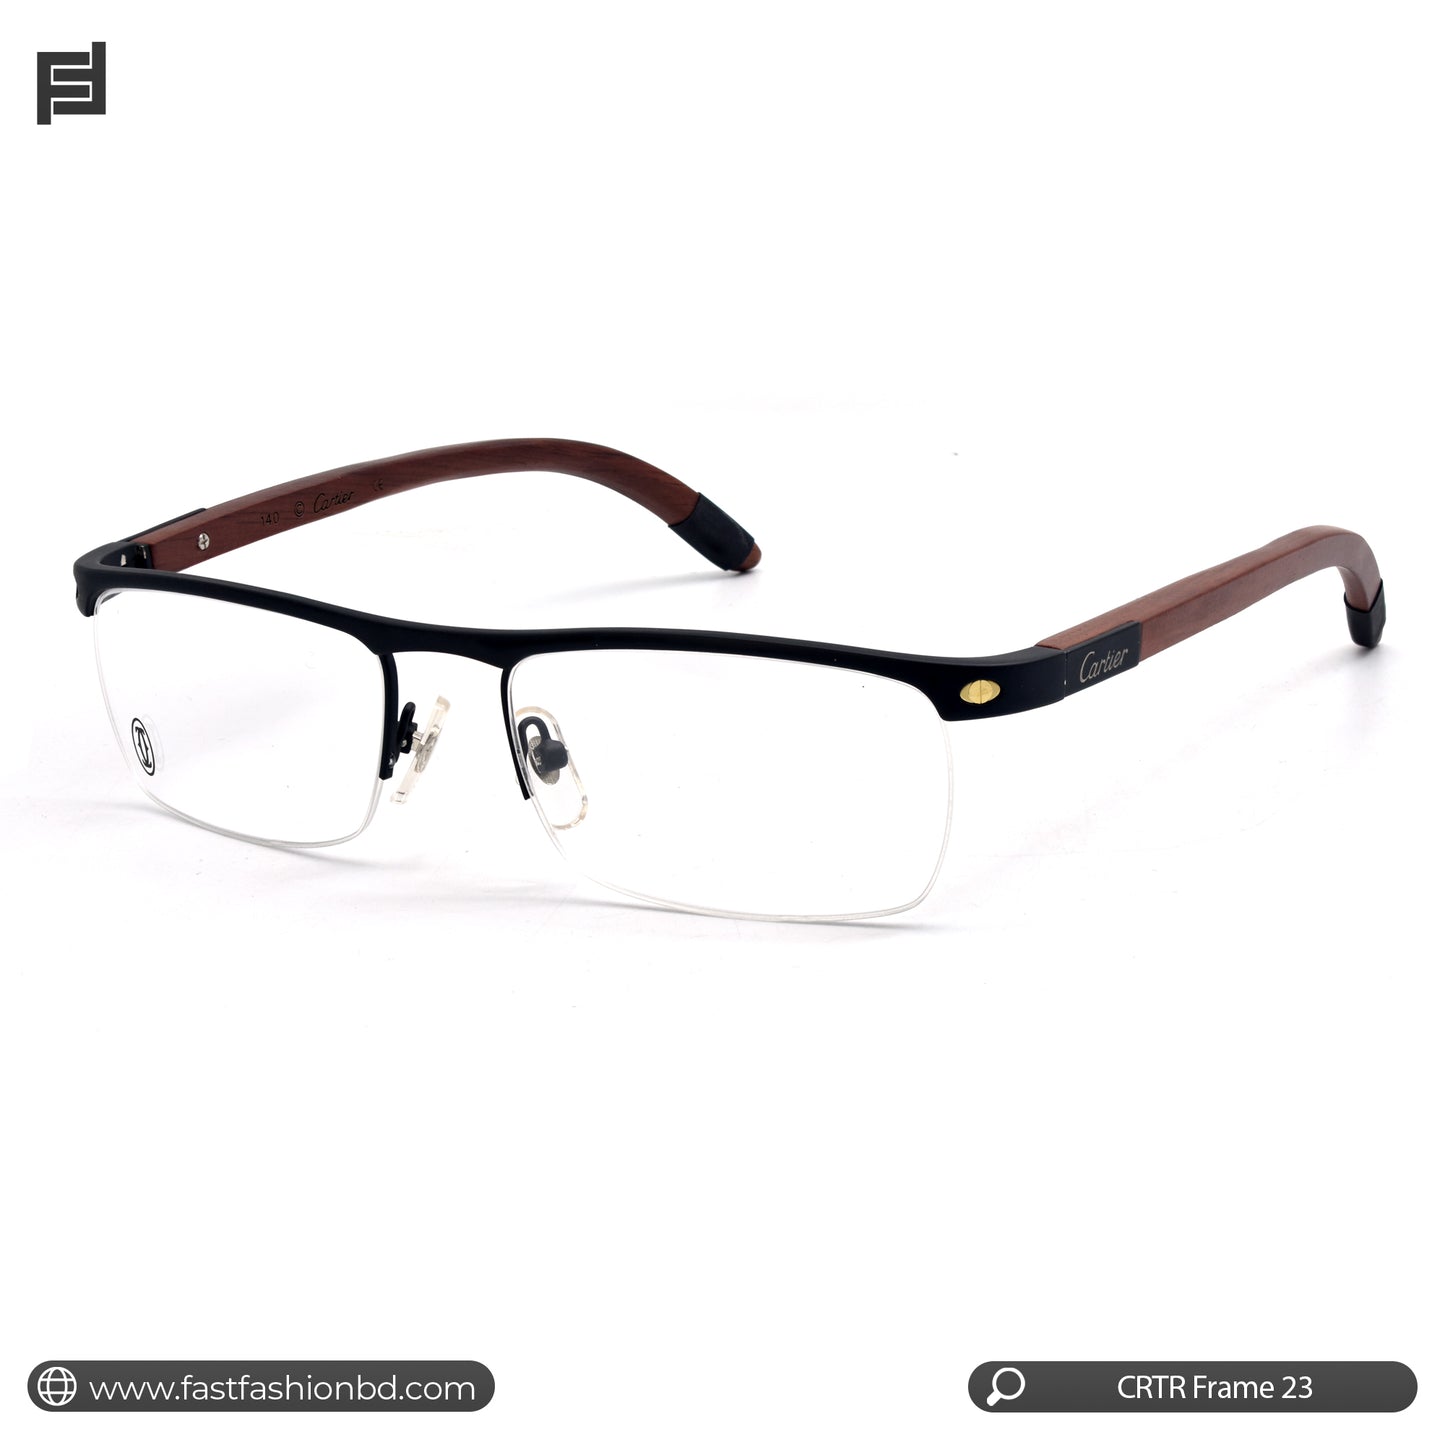 Modern Looking Trendy Stylish Optic Frame | CRTR Frame 23 | Premium Quality